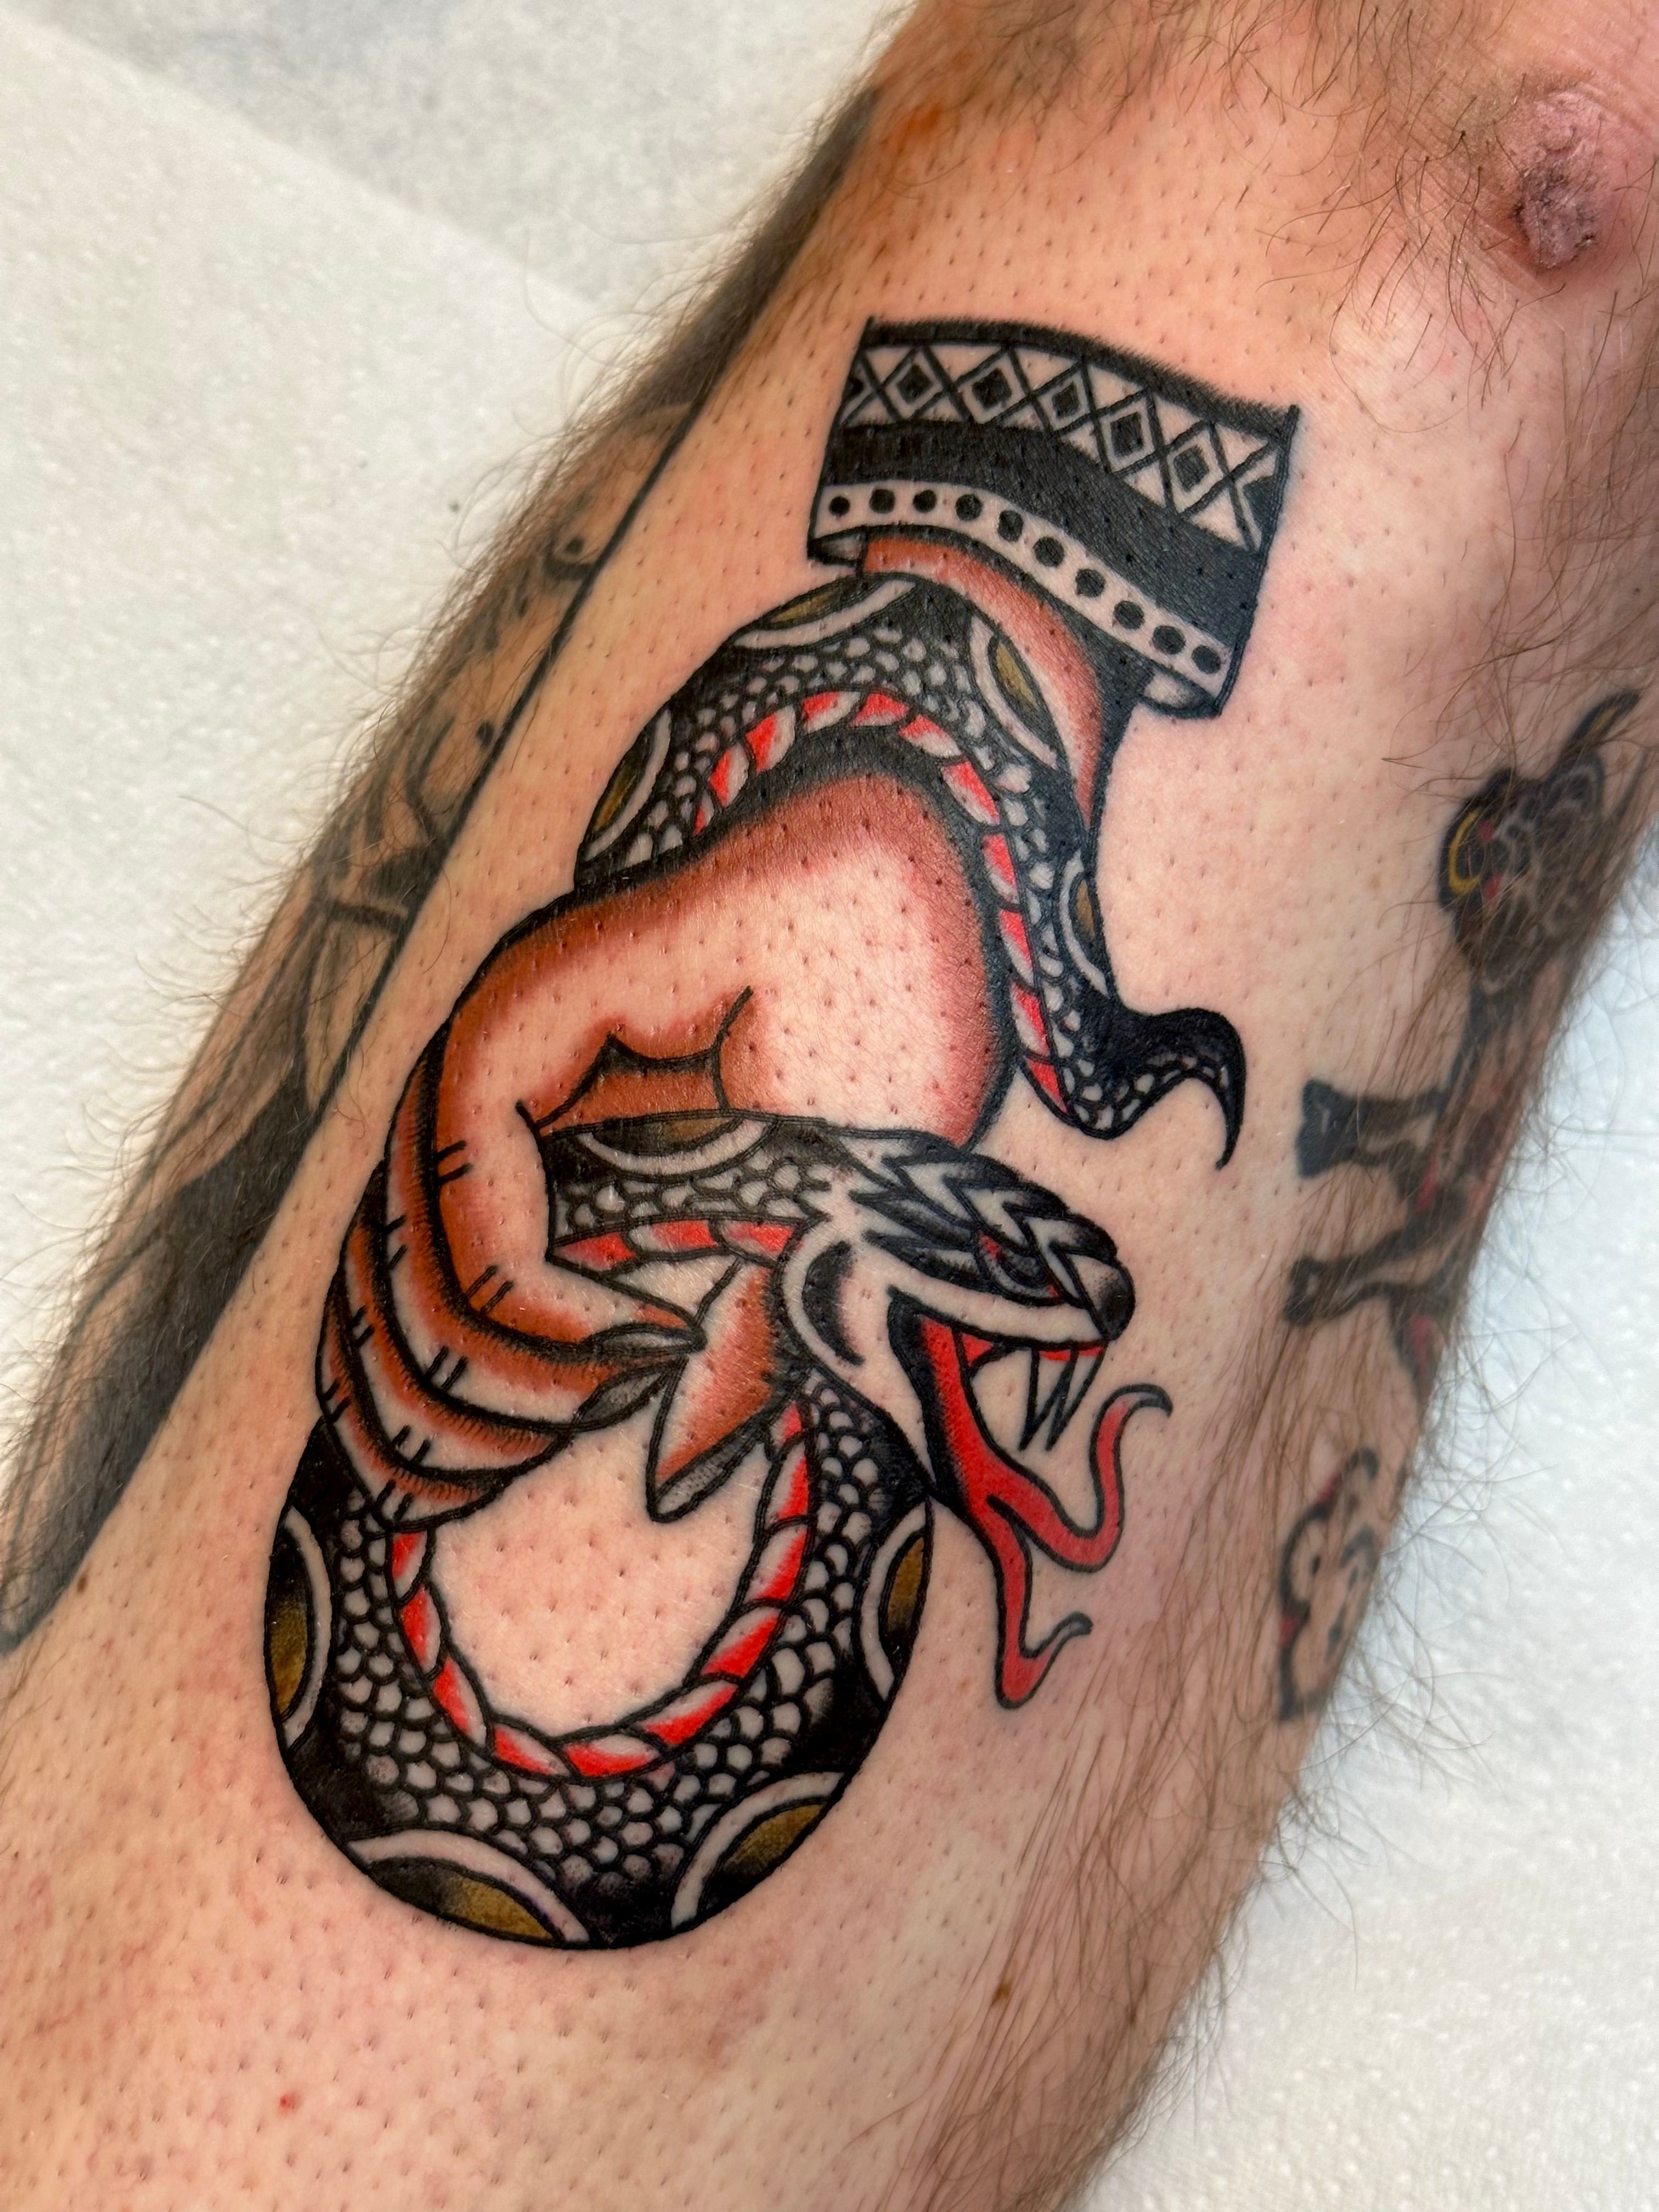 Old School Tattoos -Traditional American Tattoos with a Sense of Irony |  Traditional tattoo old school, Traditional tattoo forearm, Traditional style  tattoo